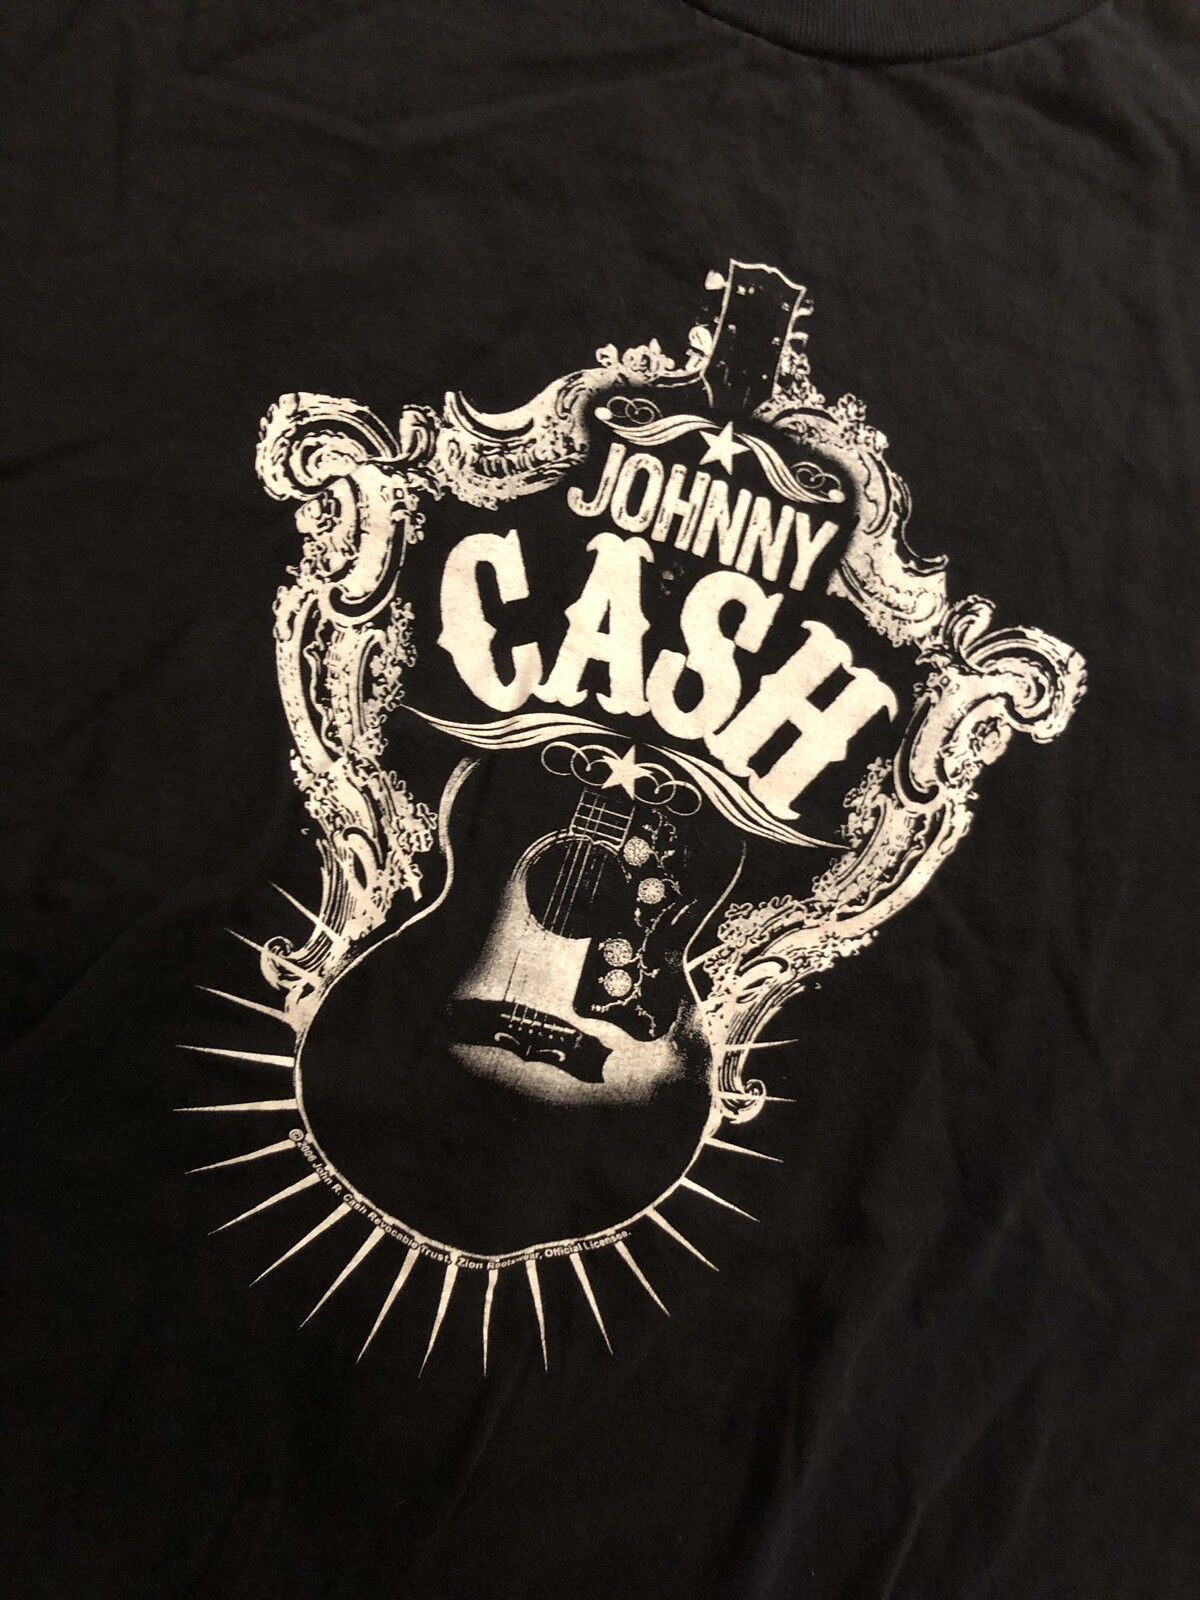 2006 JOHNNY CASH "Man in Black" Guitar Size Large T-Shirt